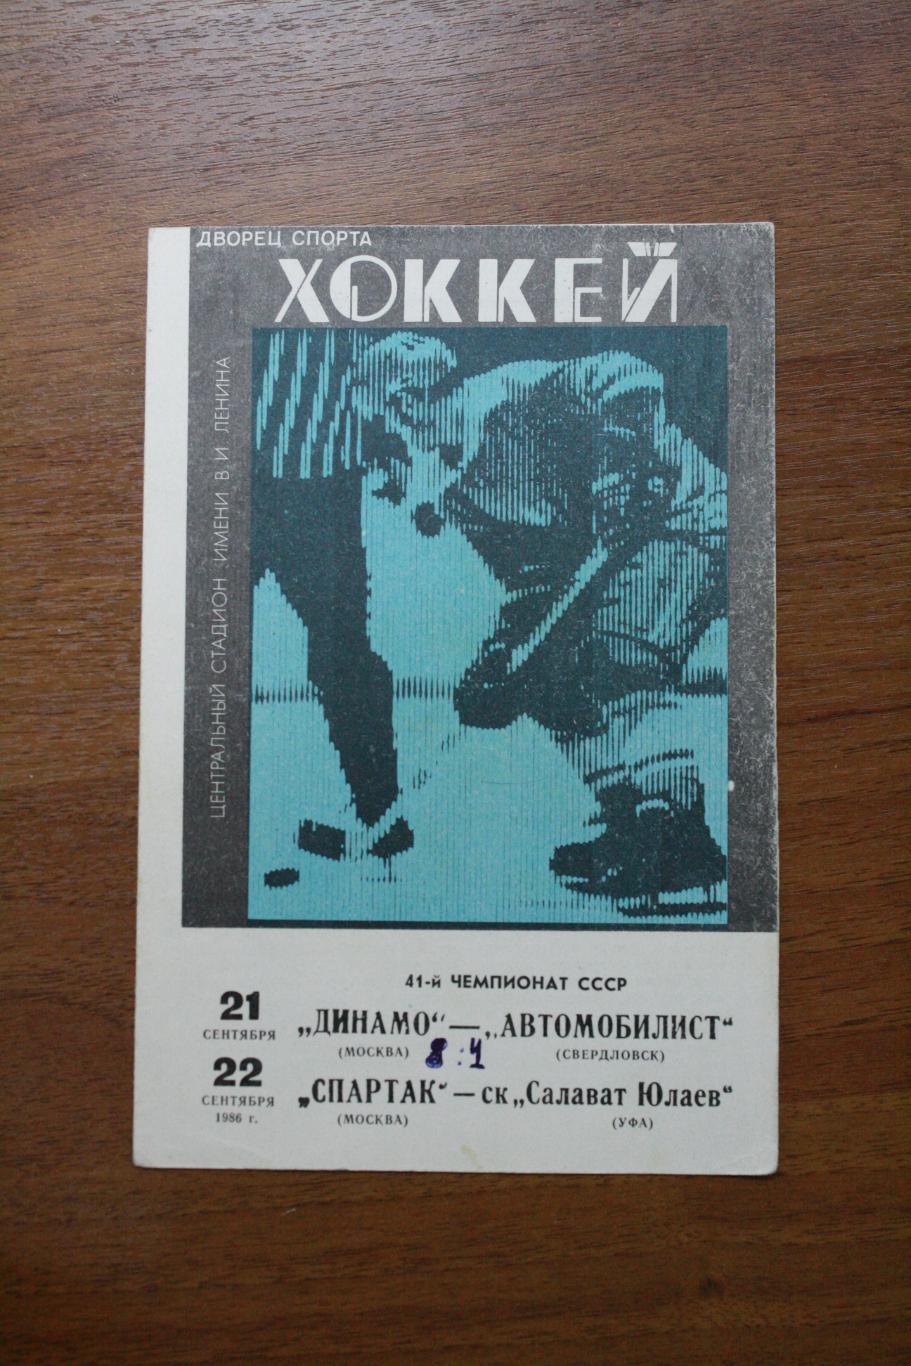 Динамо Москва - Автомобилист, Спартак - Салават Юлаев - 21.09-22.09.1986 год